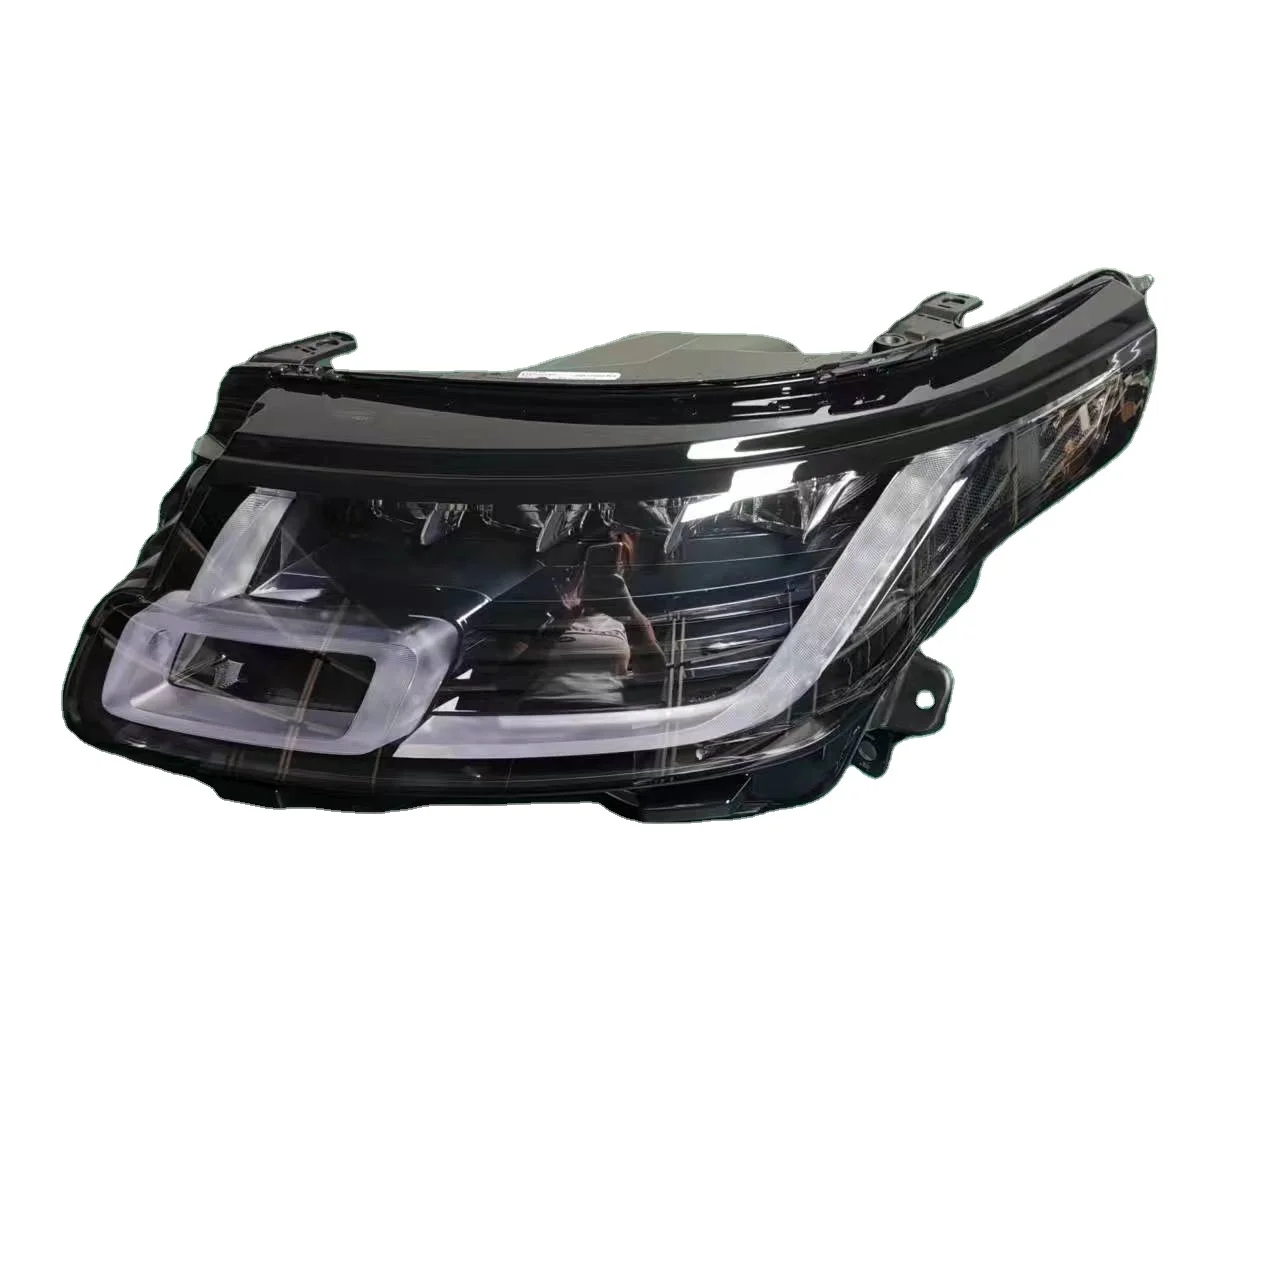 

For Range Rover Evoque Automotive lighting system 2-eye car lights led headlight brand new remanufactured car headlight